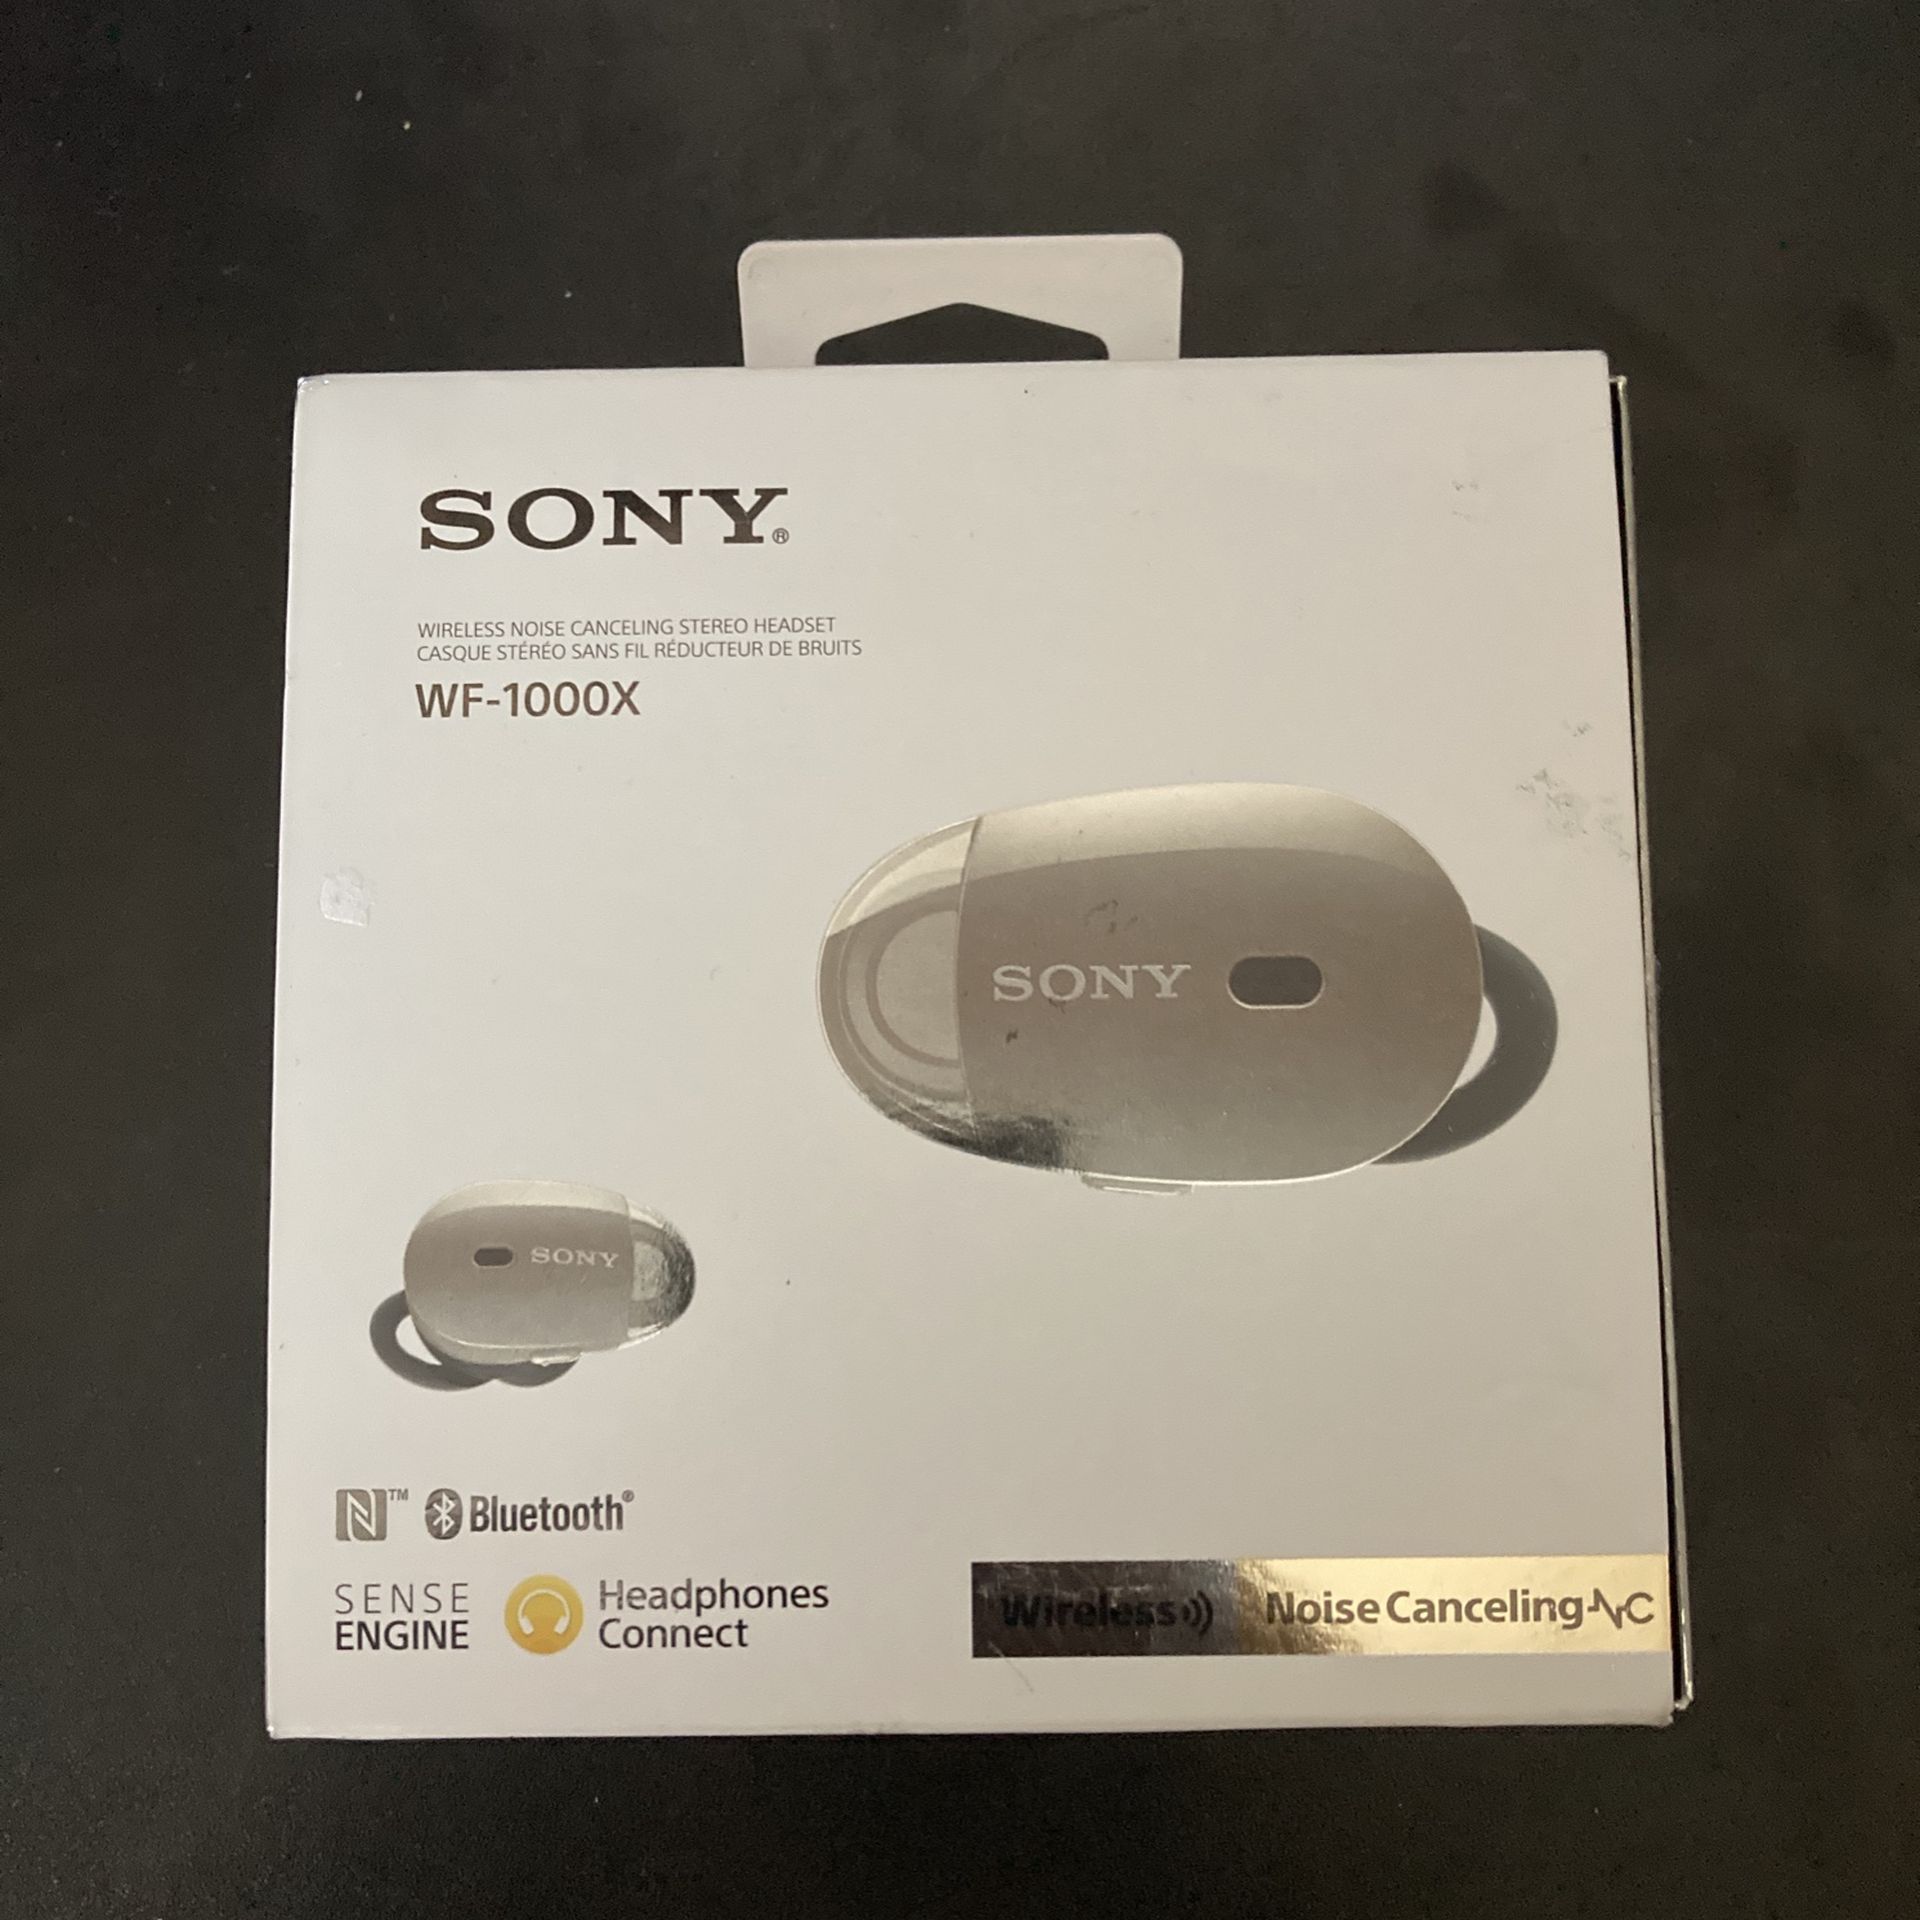 NEW Sony WF-1000X Wireless Noise-Canceling Headset Headphones (Black)